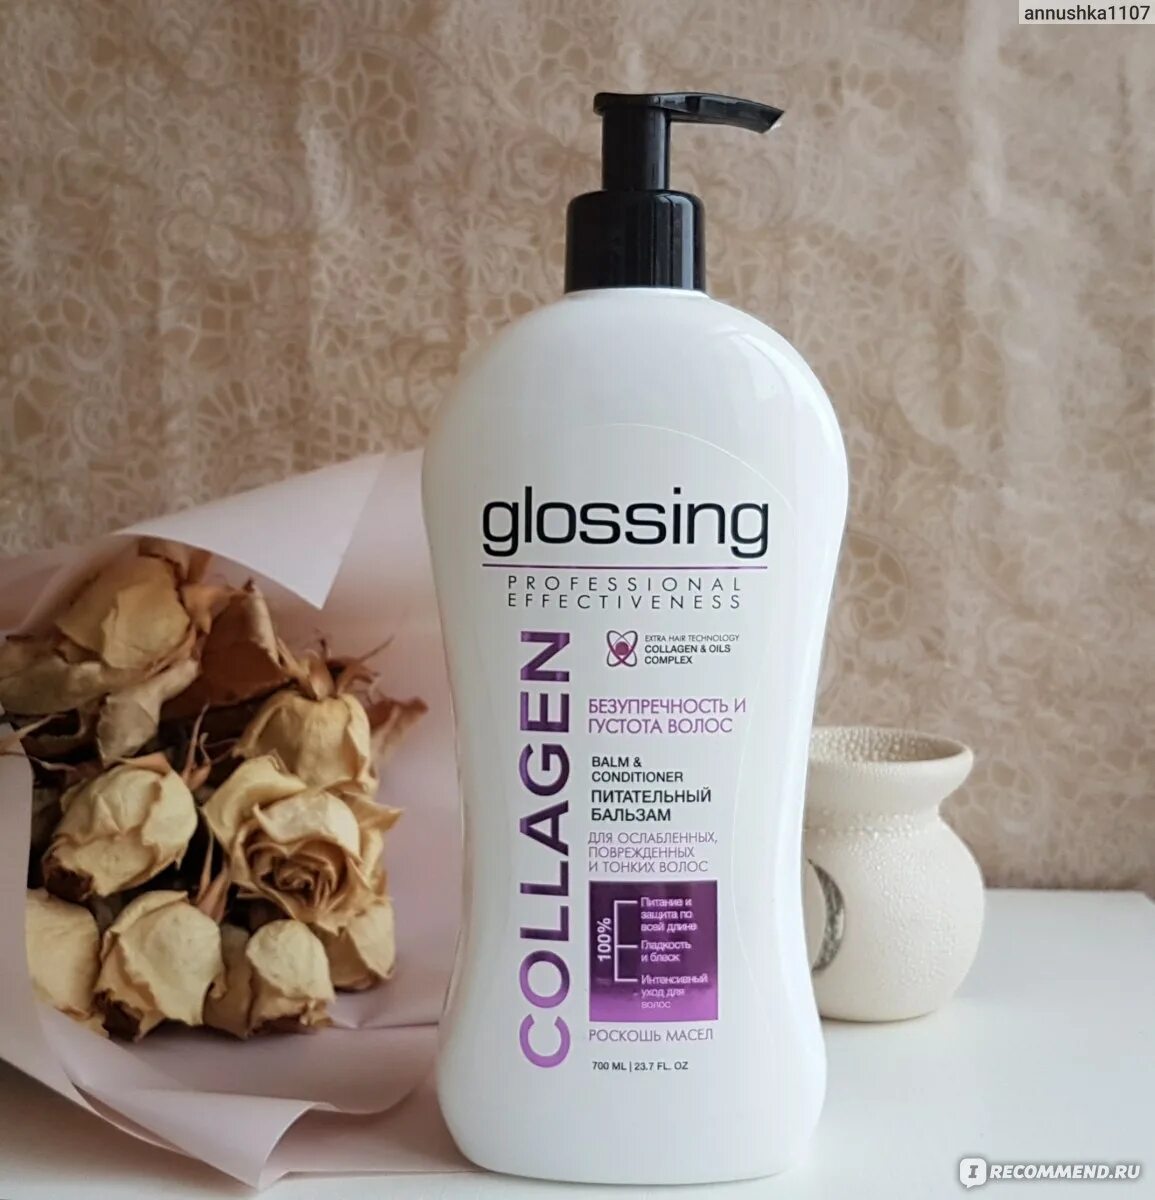 Glossing Collagen шампунь. Бальзам для волос Glossing 700 мл. Бальзам Glossing Collagen Fix Price. Бальзам для волос фикс. Для волос fix